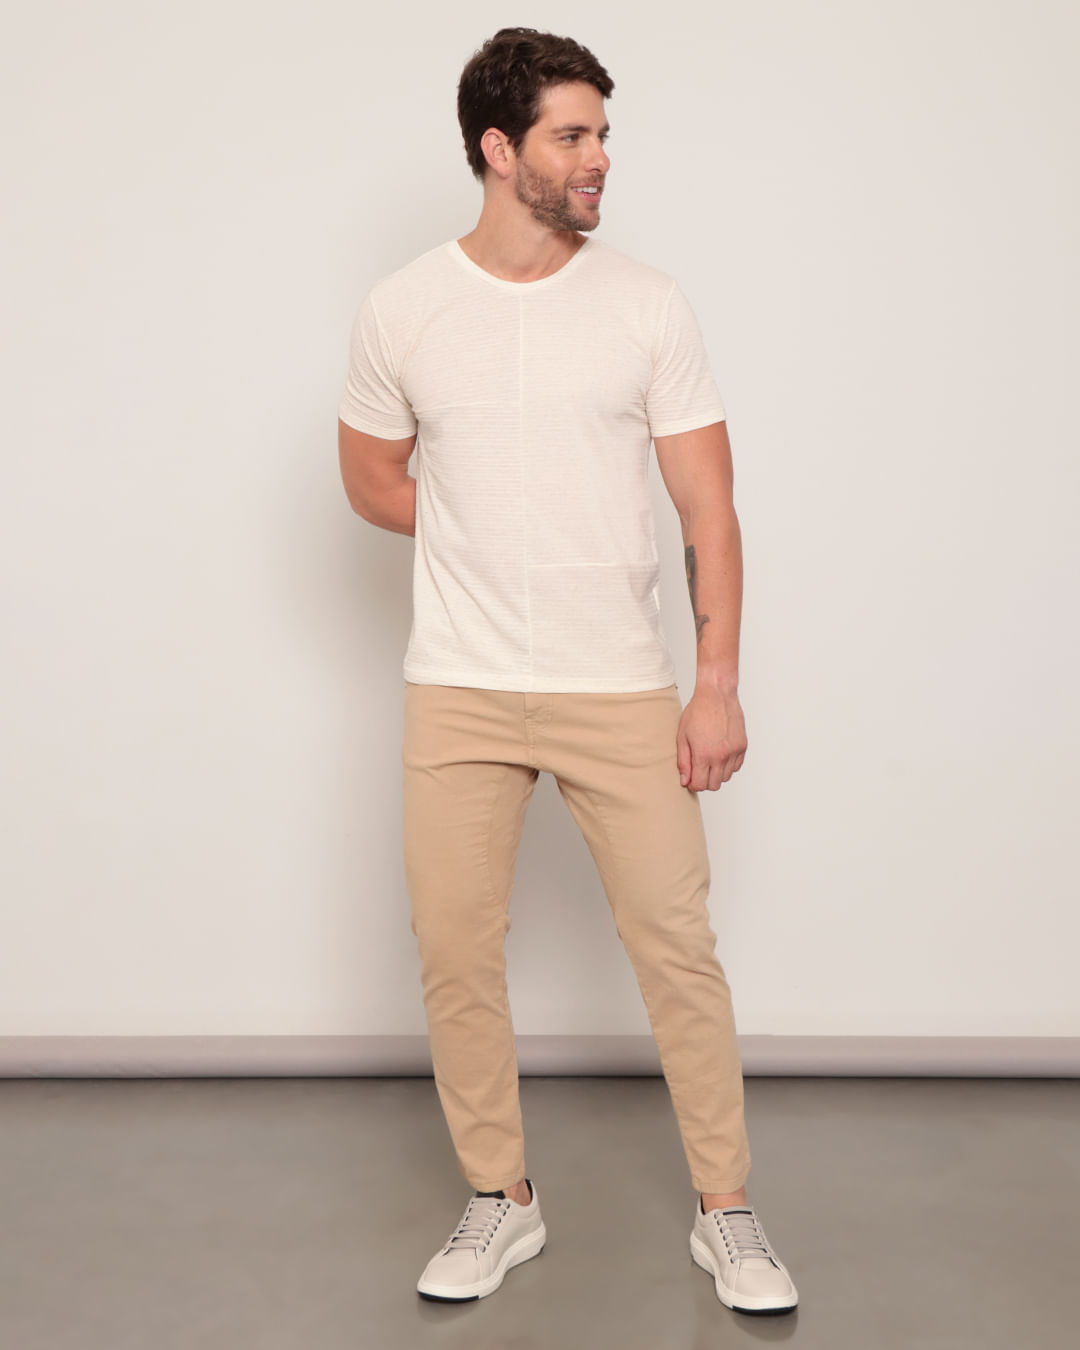 Camiseta Masculina Texturizada Off White